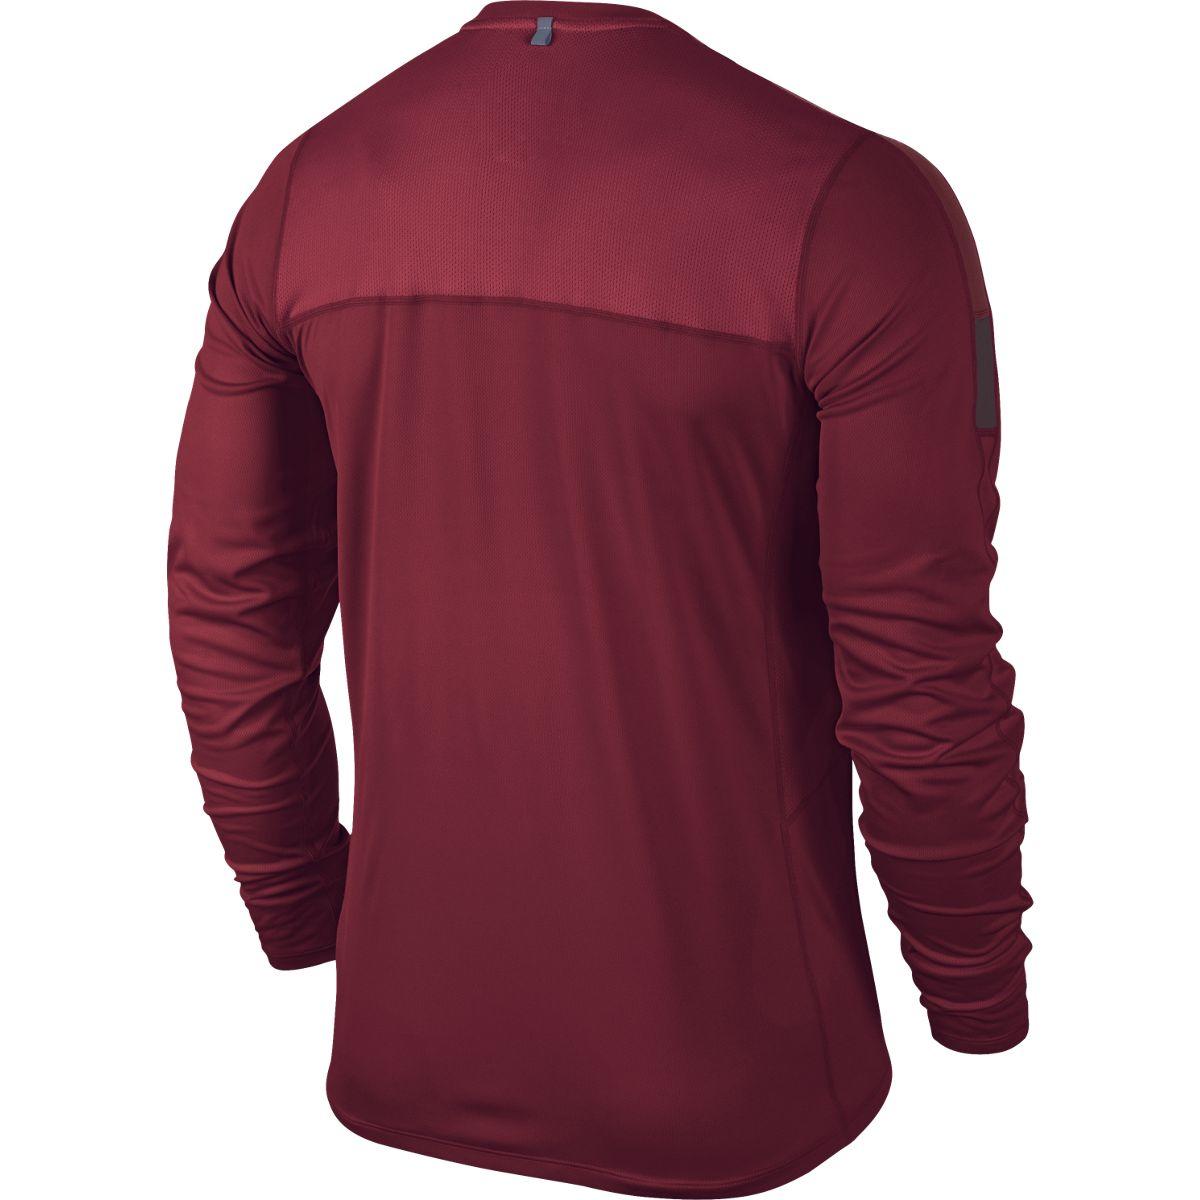 Nike Mens Racer Long Sleeve Shirt - Gym Red - Tennisnuts.com